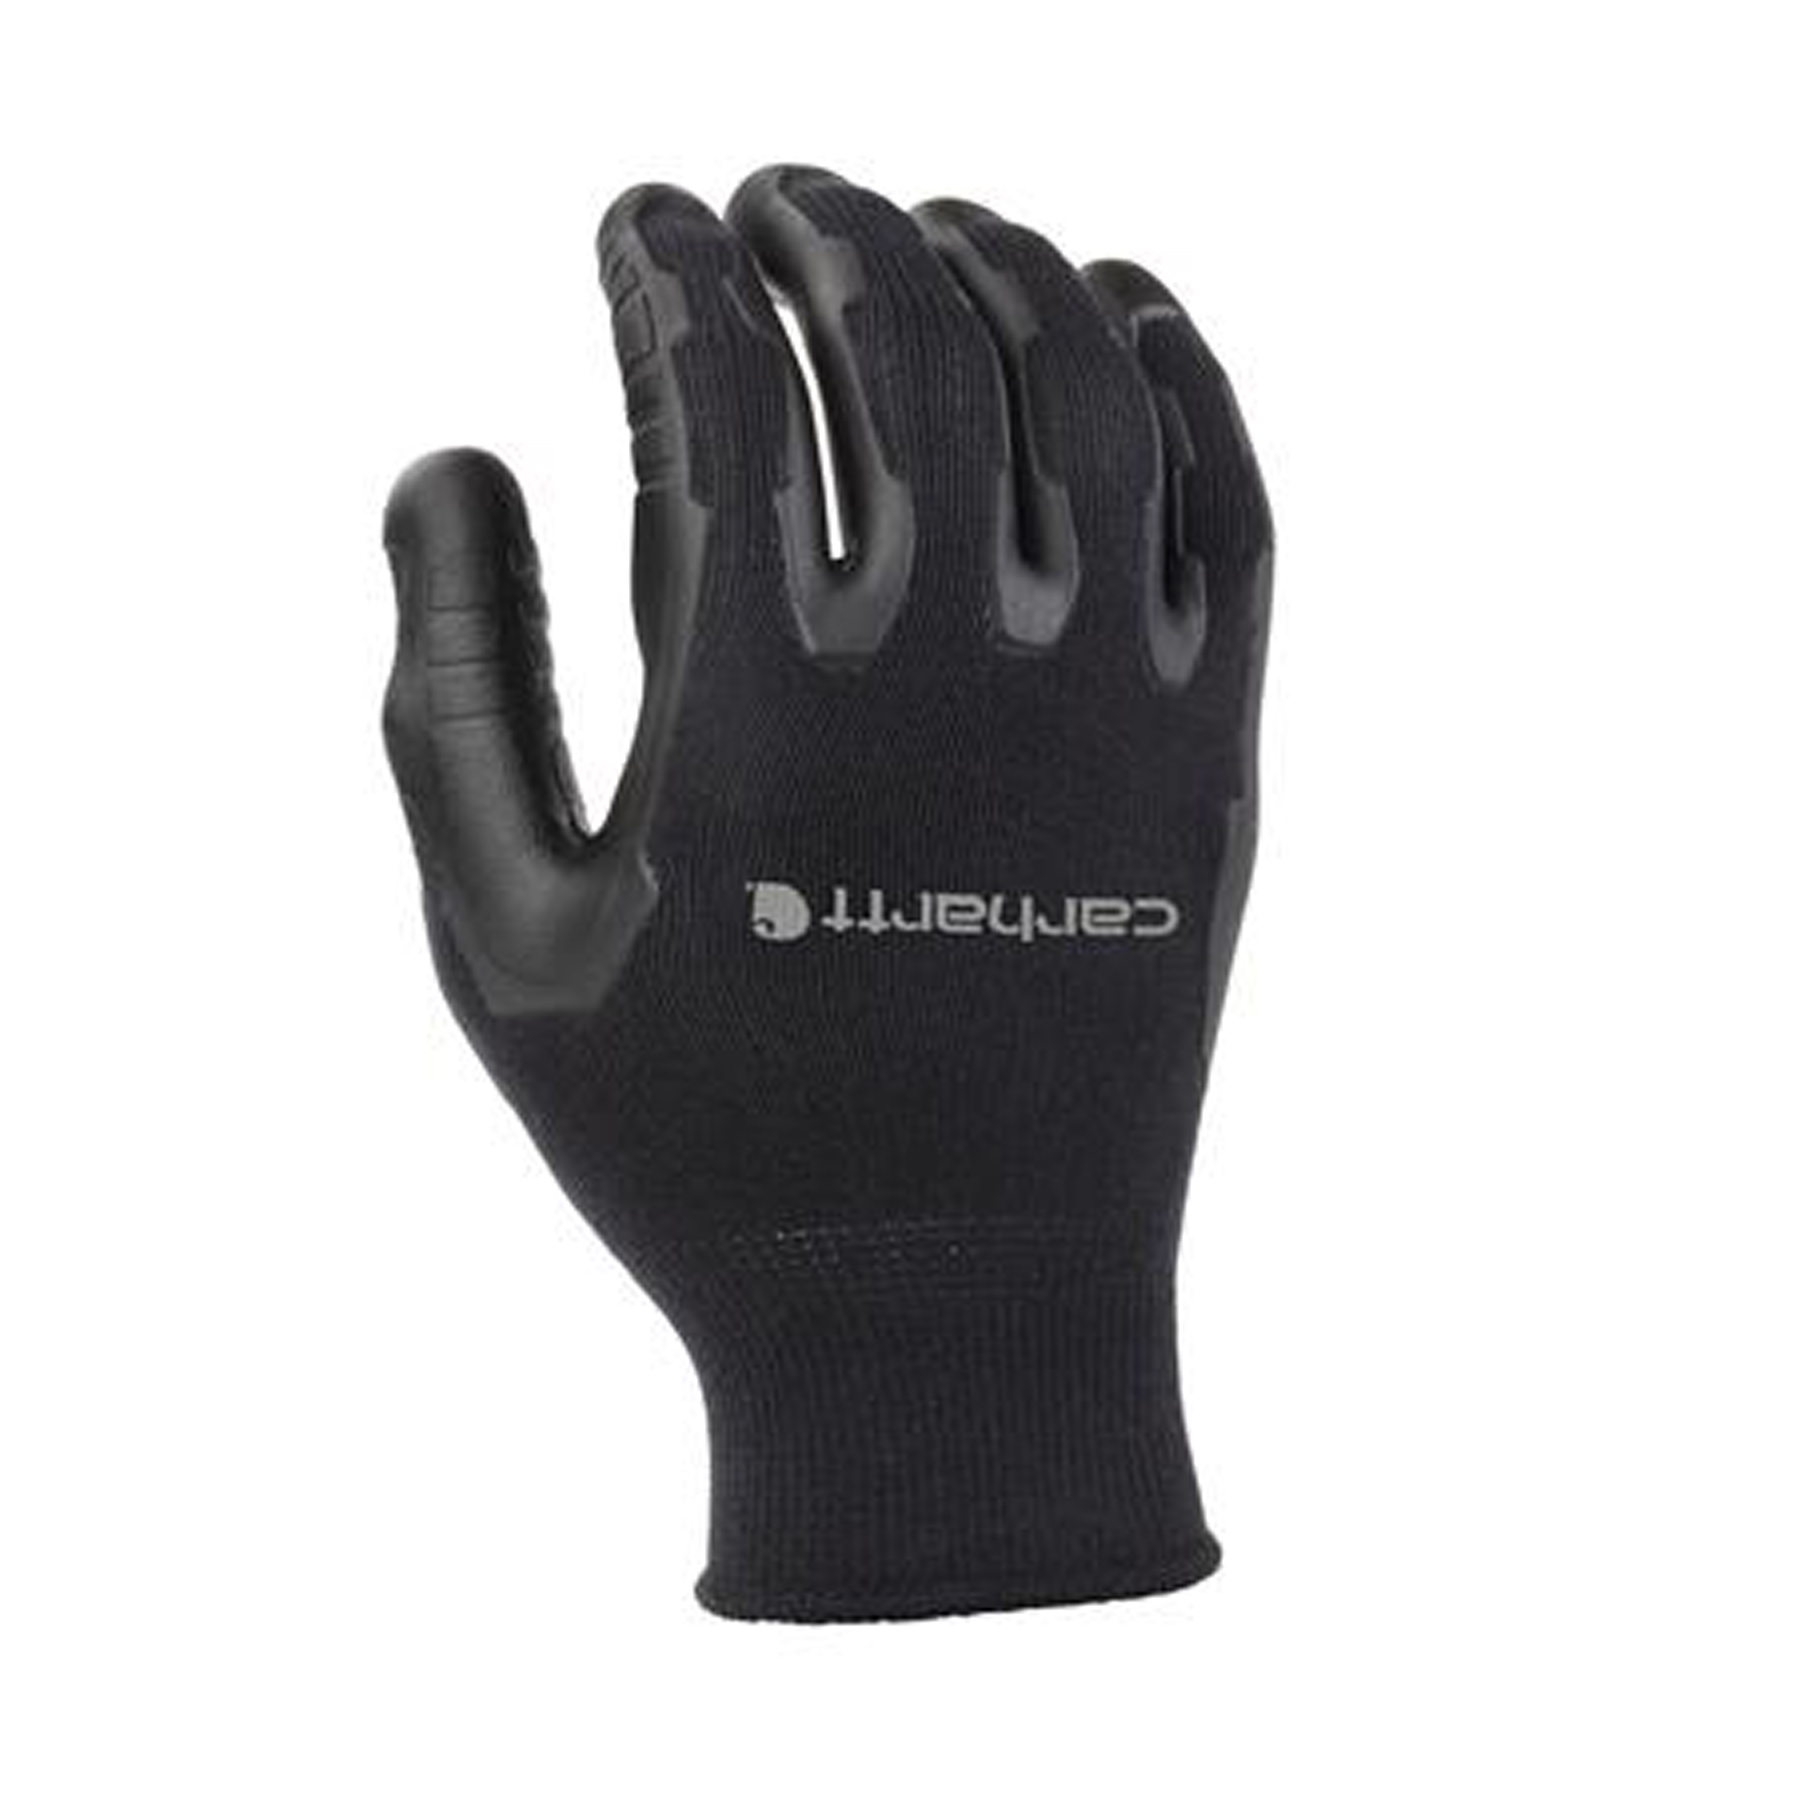 Carhartt C Grip Pro Palm Gloves